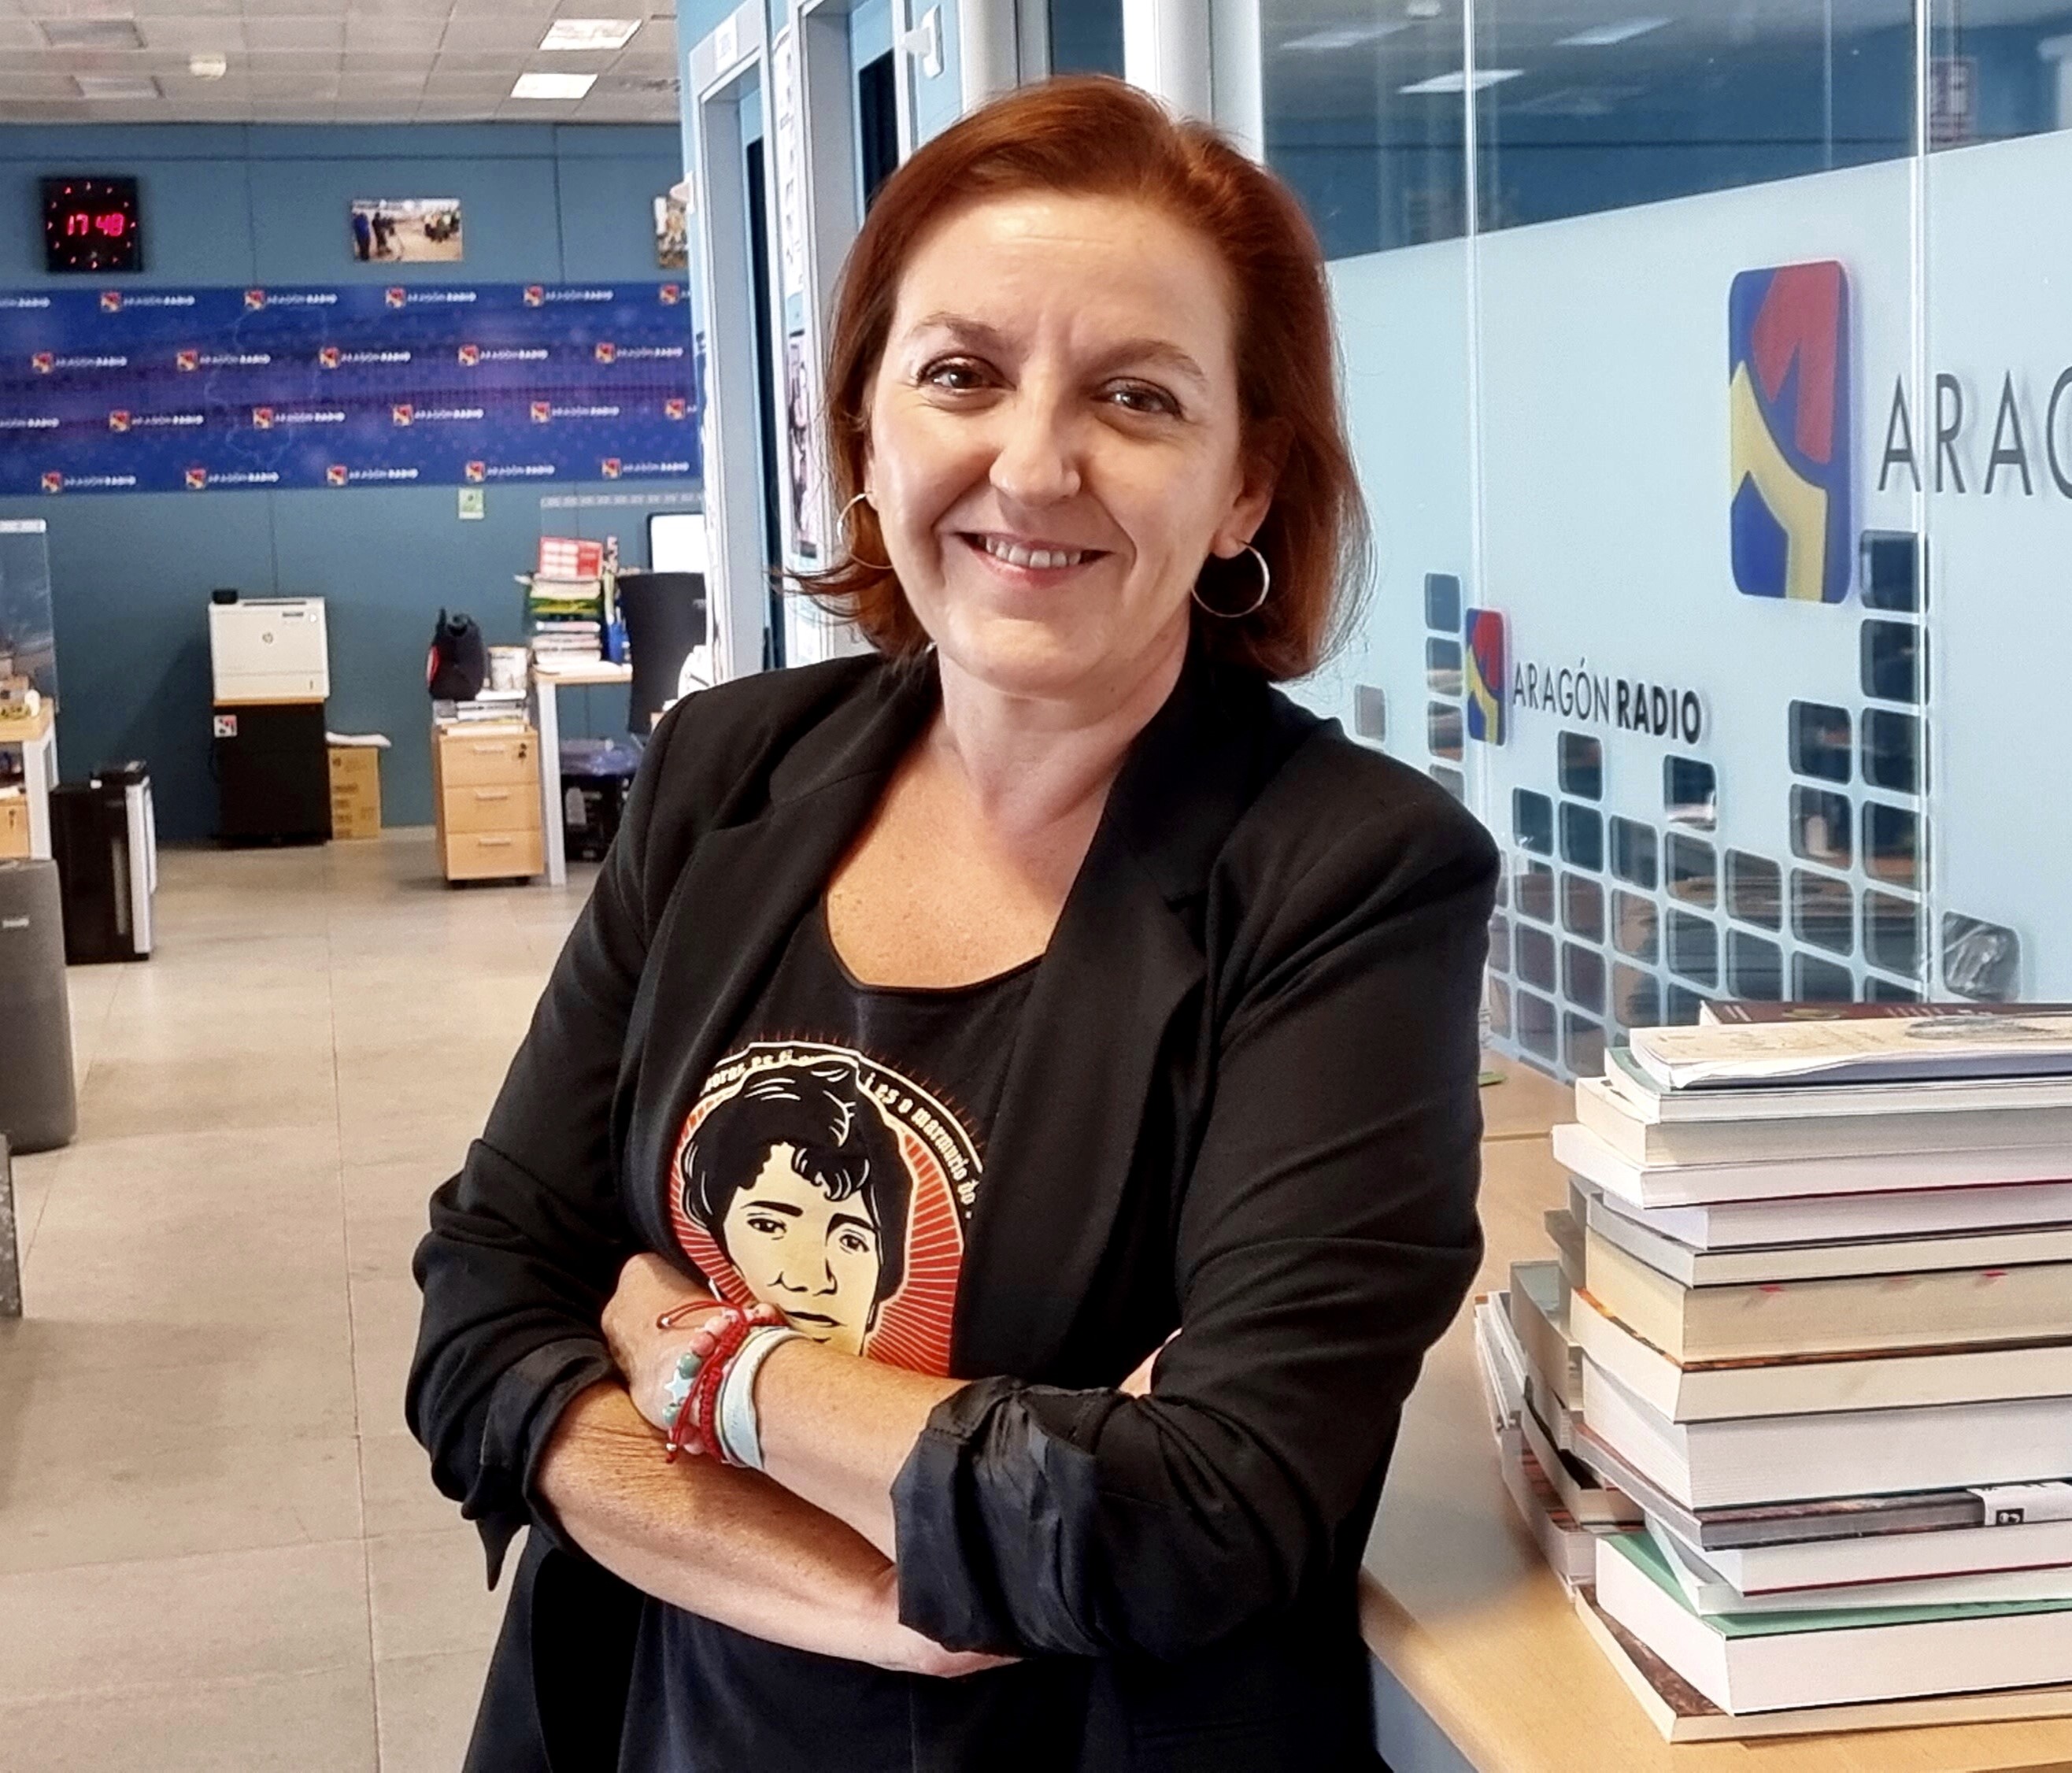 Dra. Ana Segura